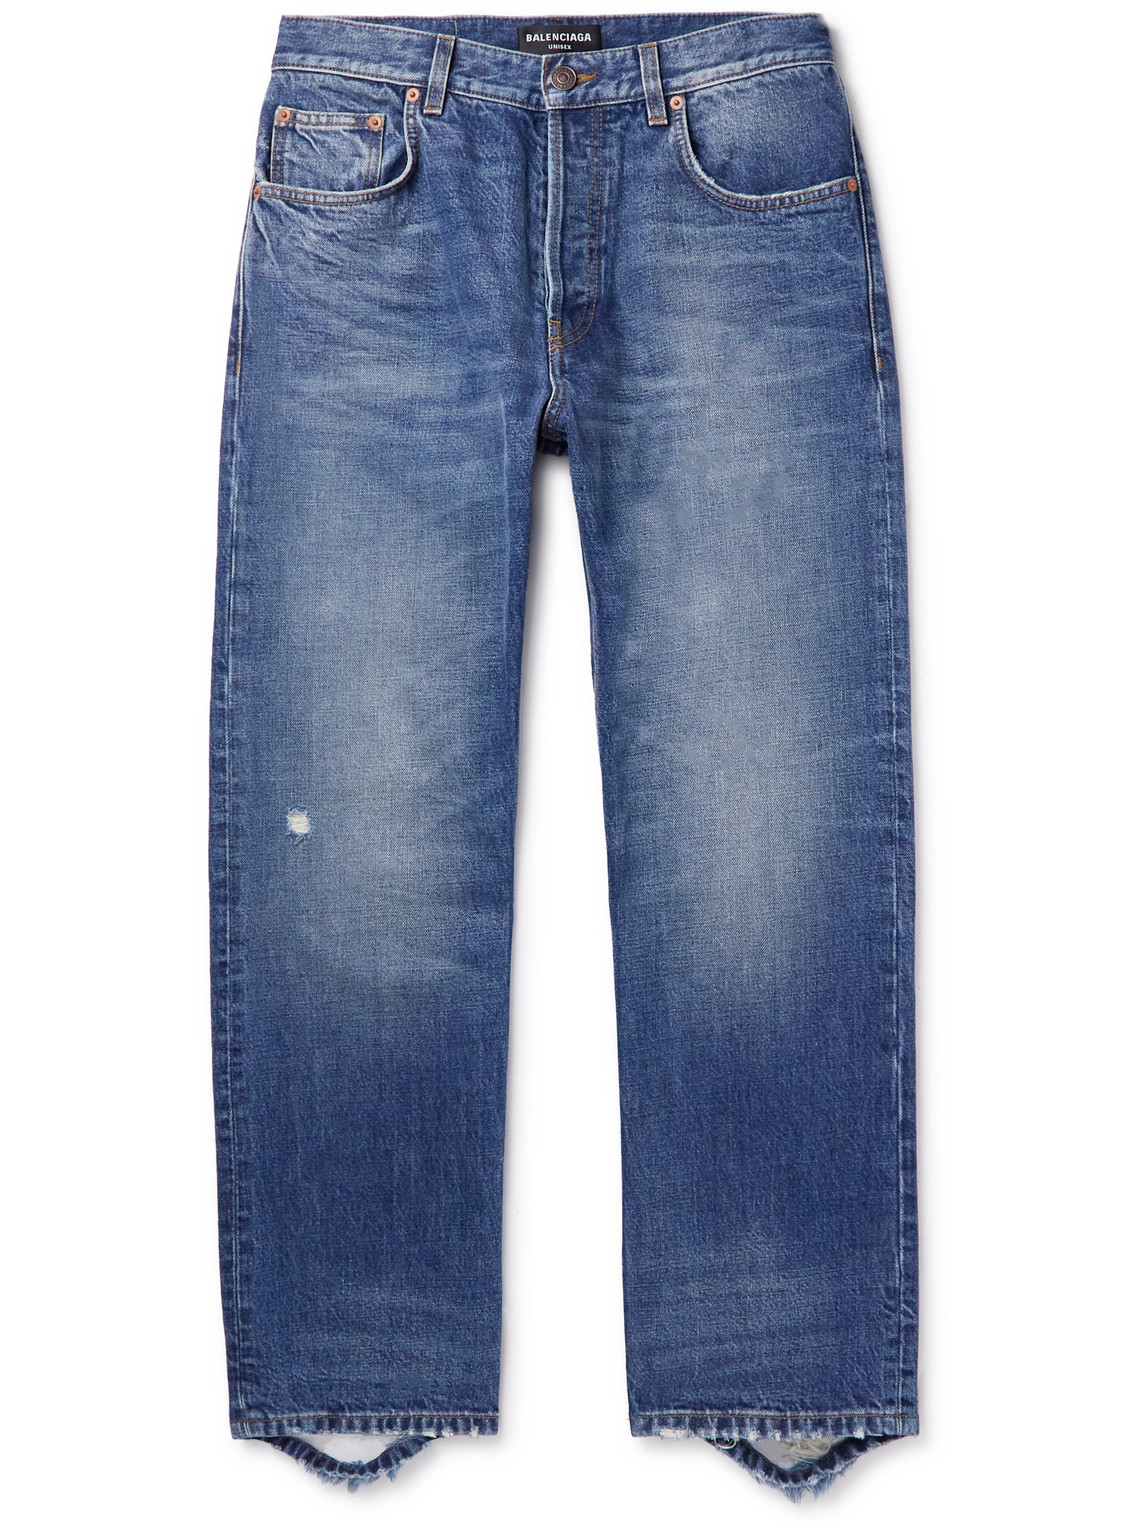 Balenciaga Slim-Fit Distressed Jeans